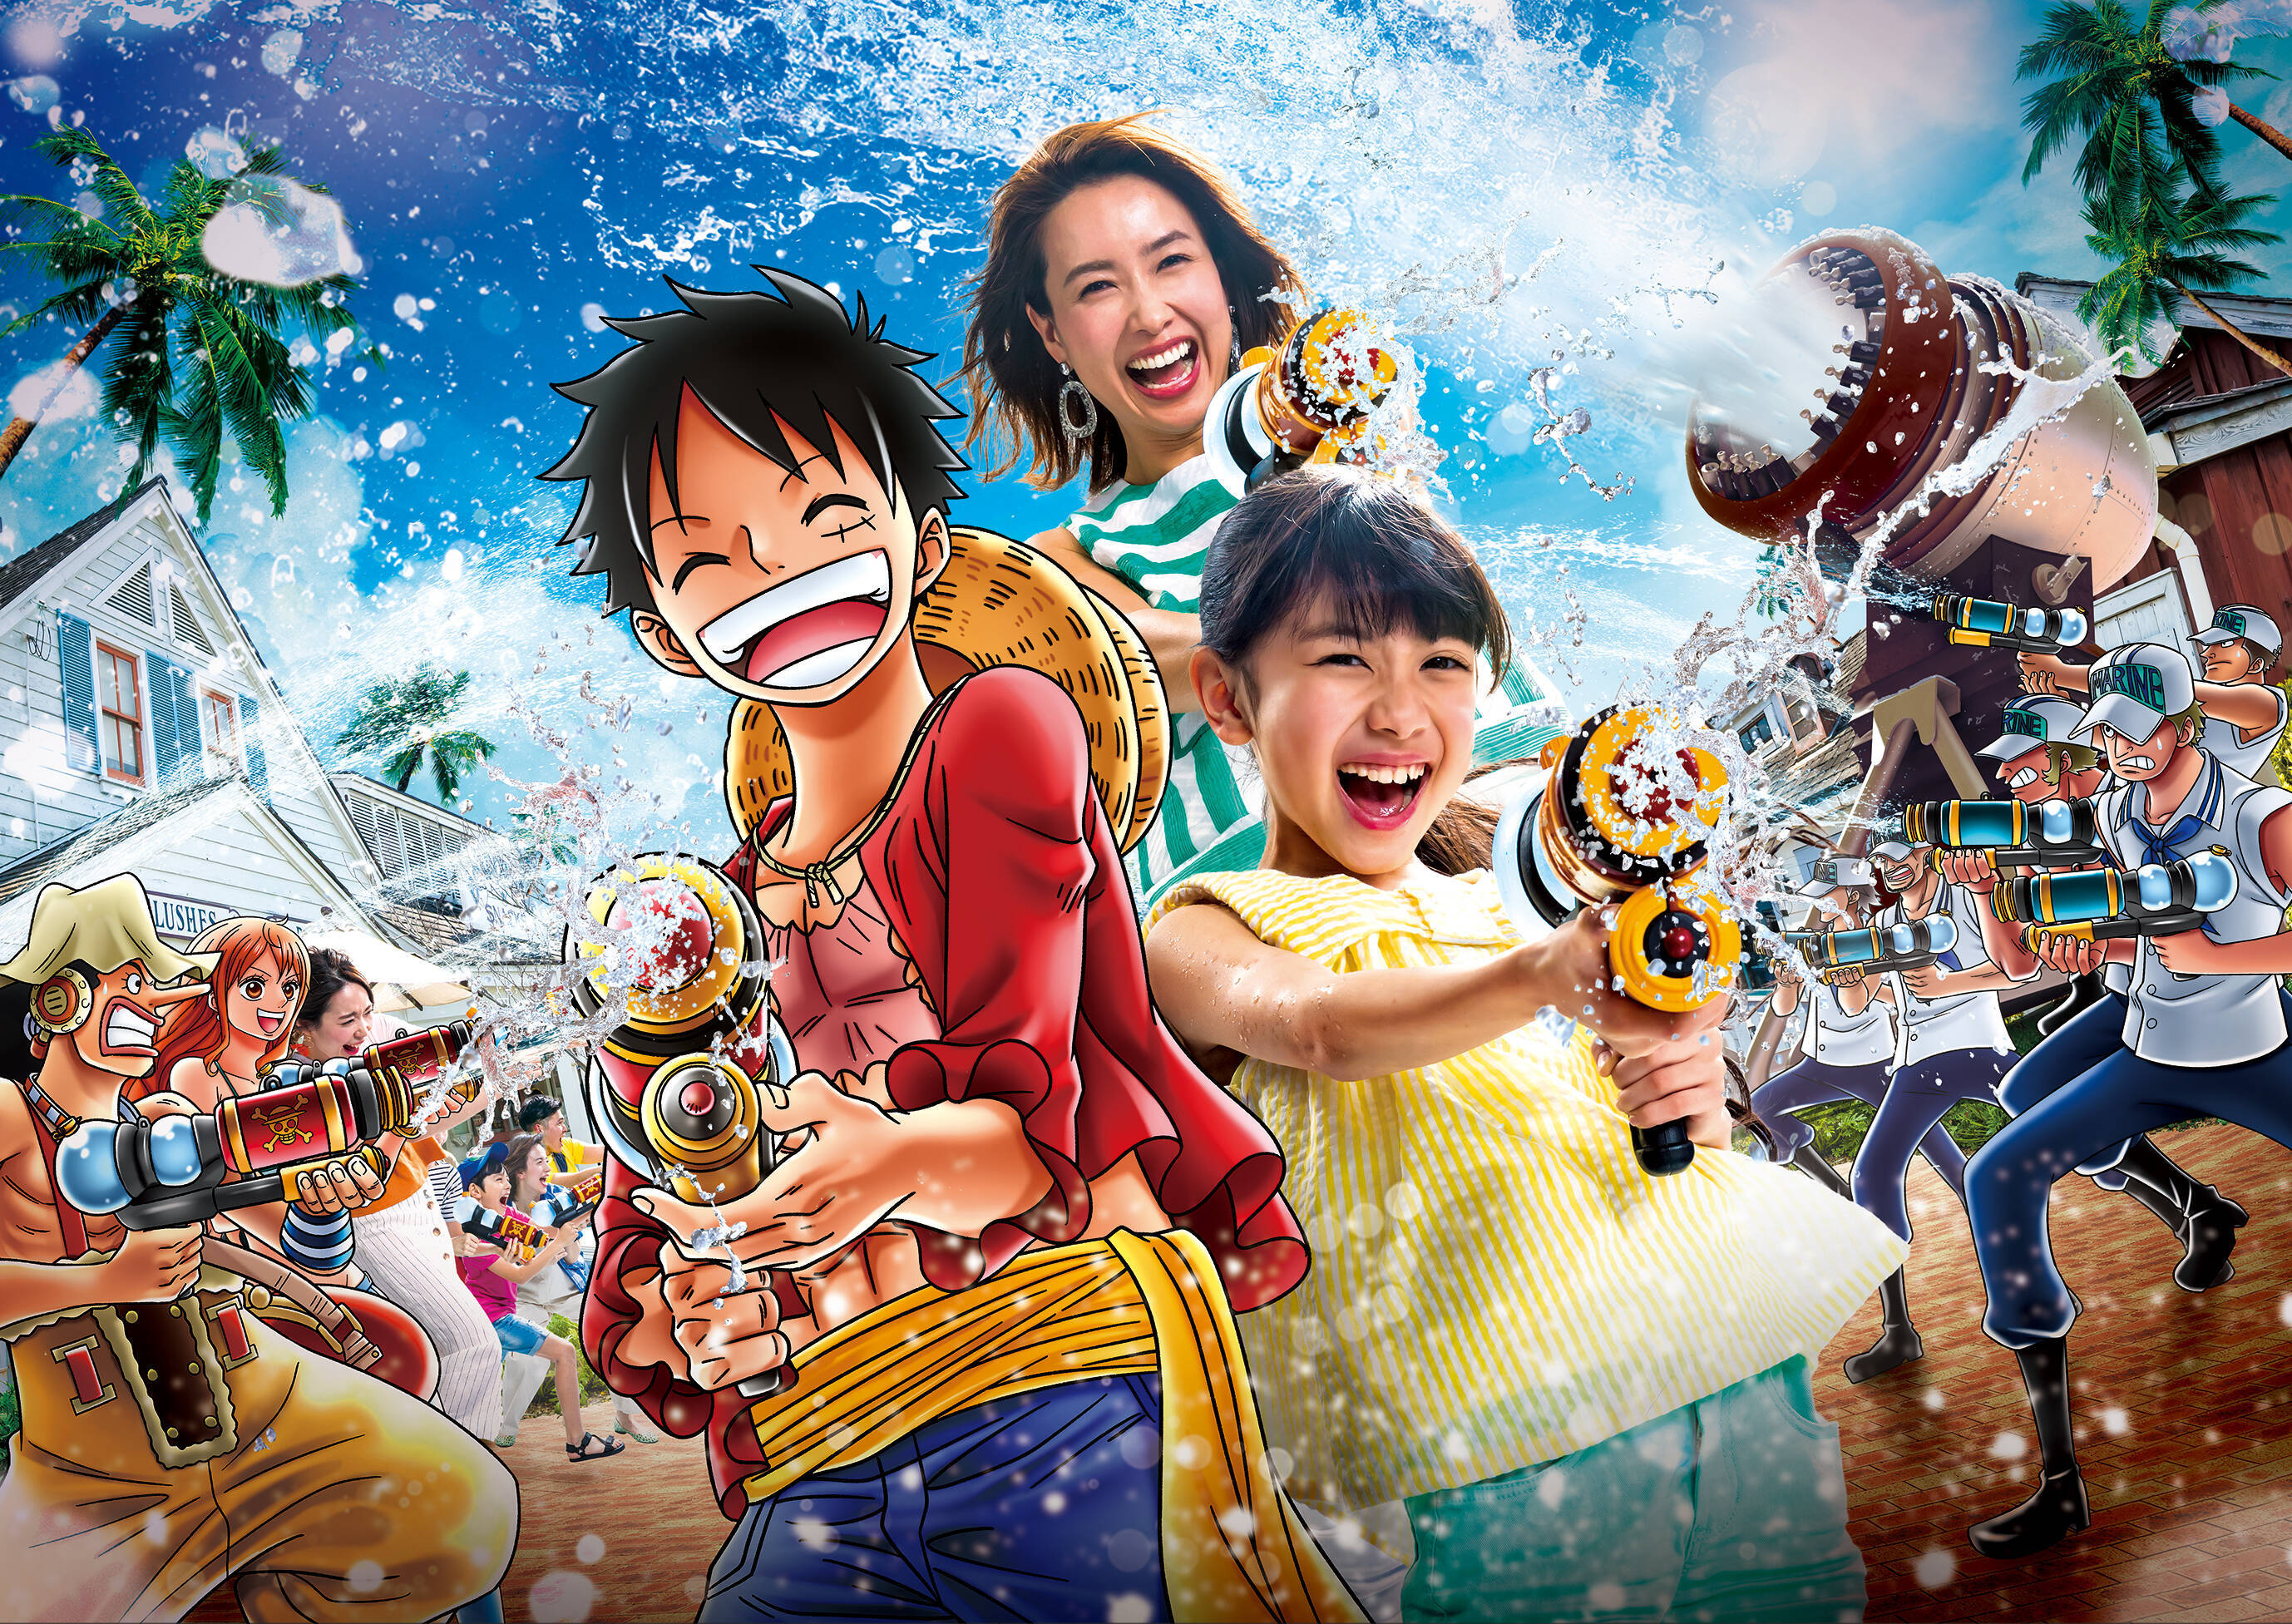 Usjの夏が超絶楽しい One Piece や ミニオン たちの夏イベントが今年も開催 大阪 19年6月2日 エキサイトニュース 2 4